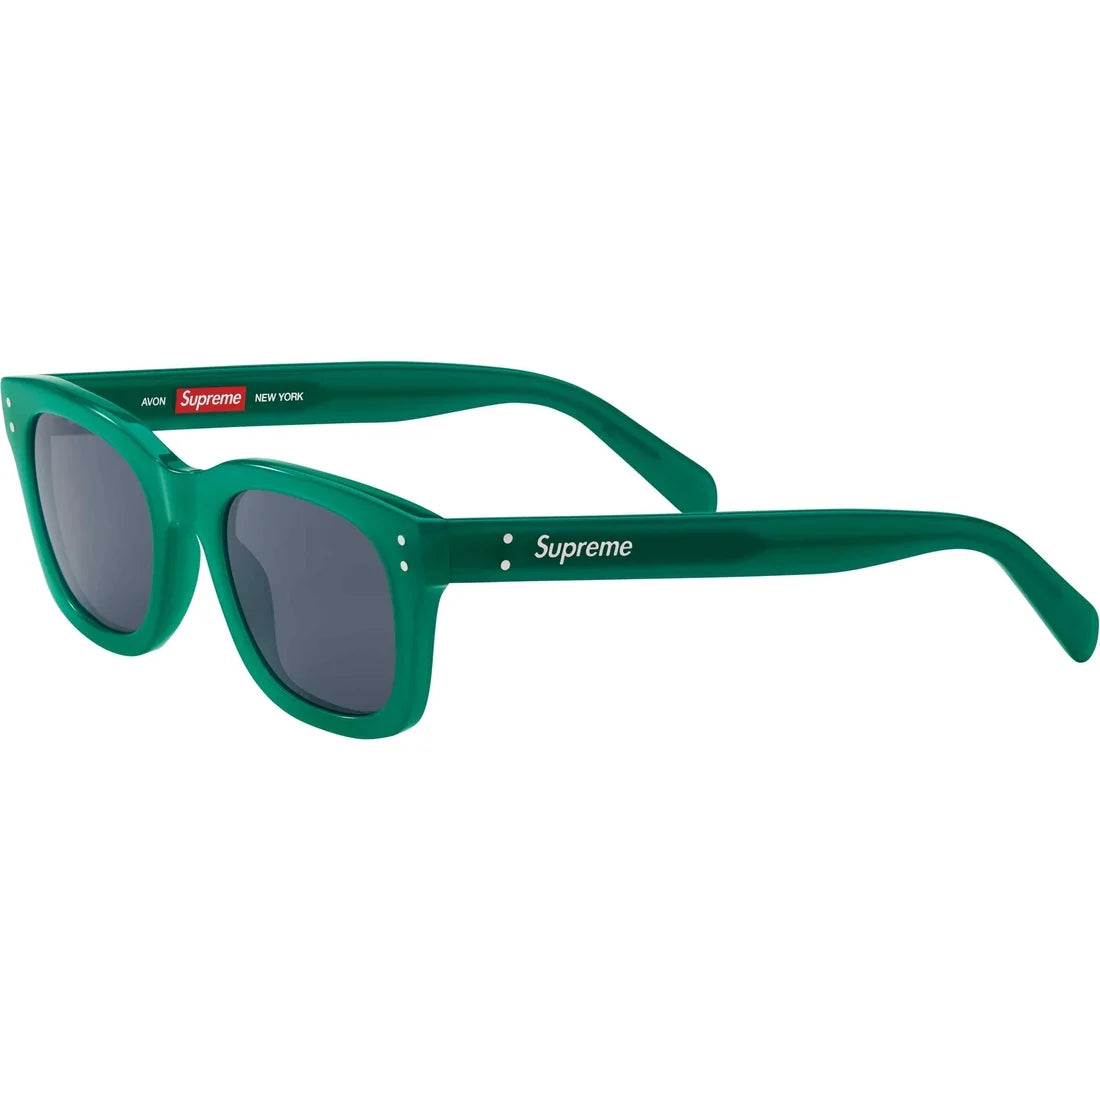 Supreme Avon Sunglasses Green